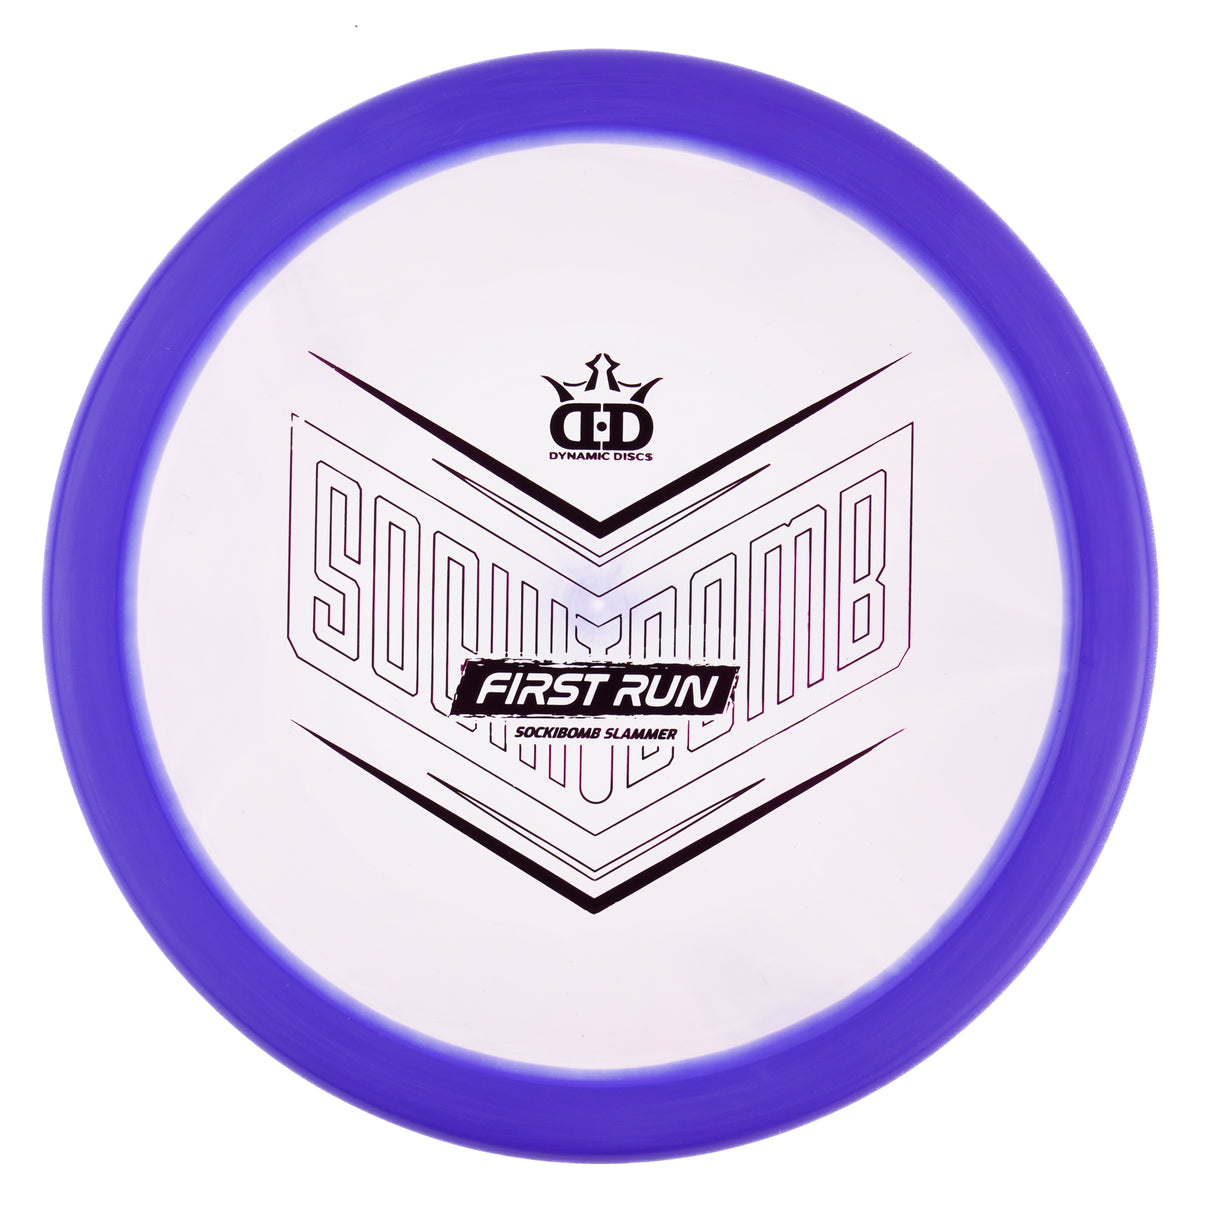 Dynamic Discs Sockibomb Slammer - First Run Classic Supreme Orbit 173g | Style 0003